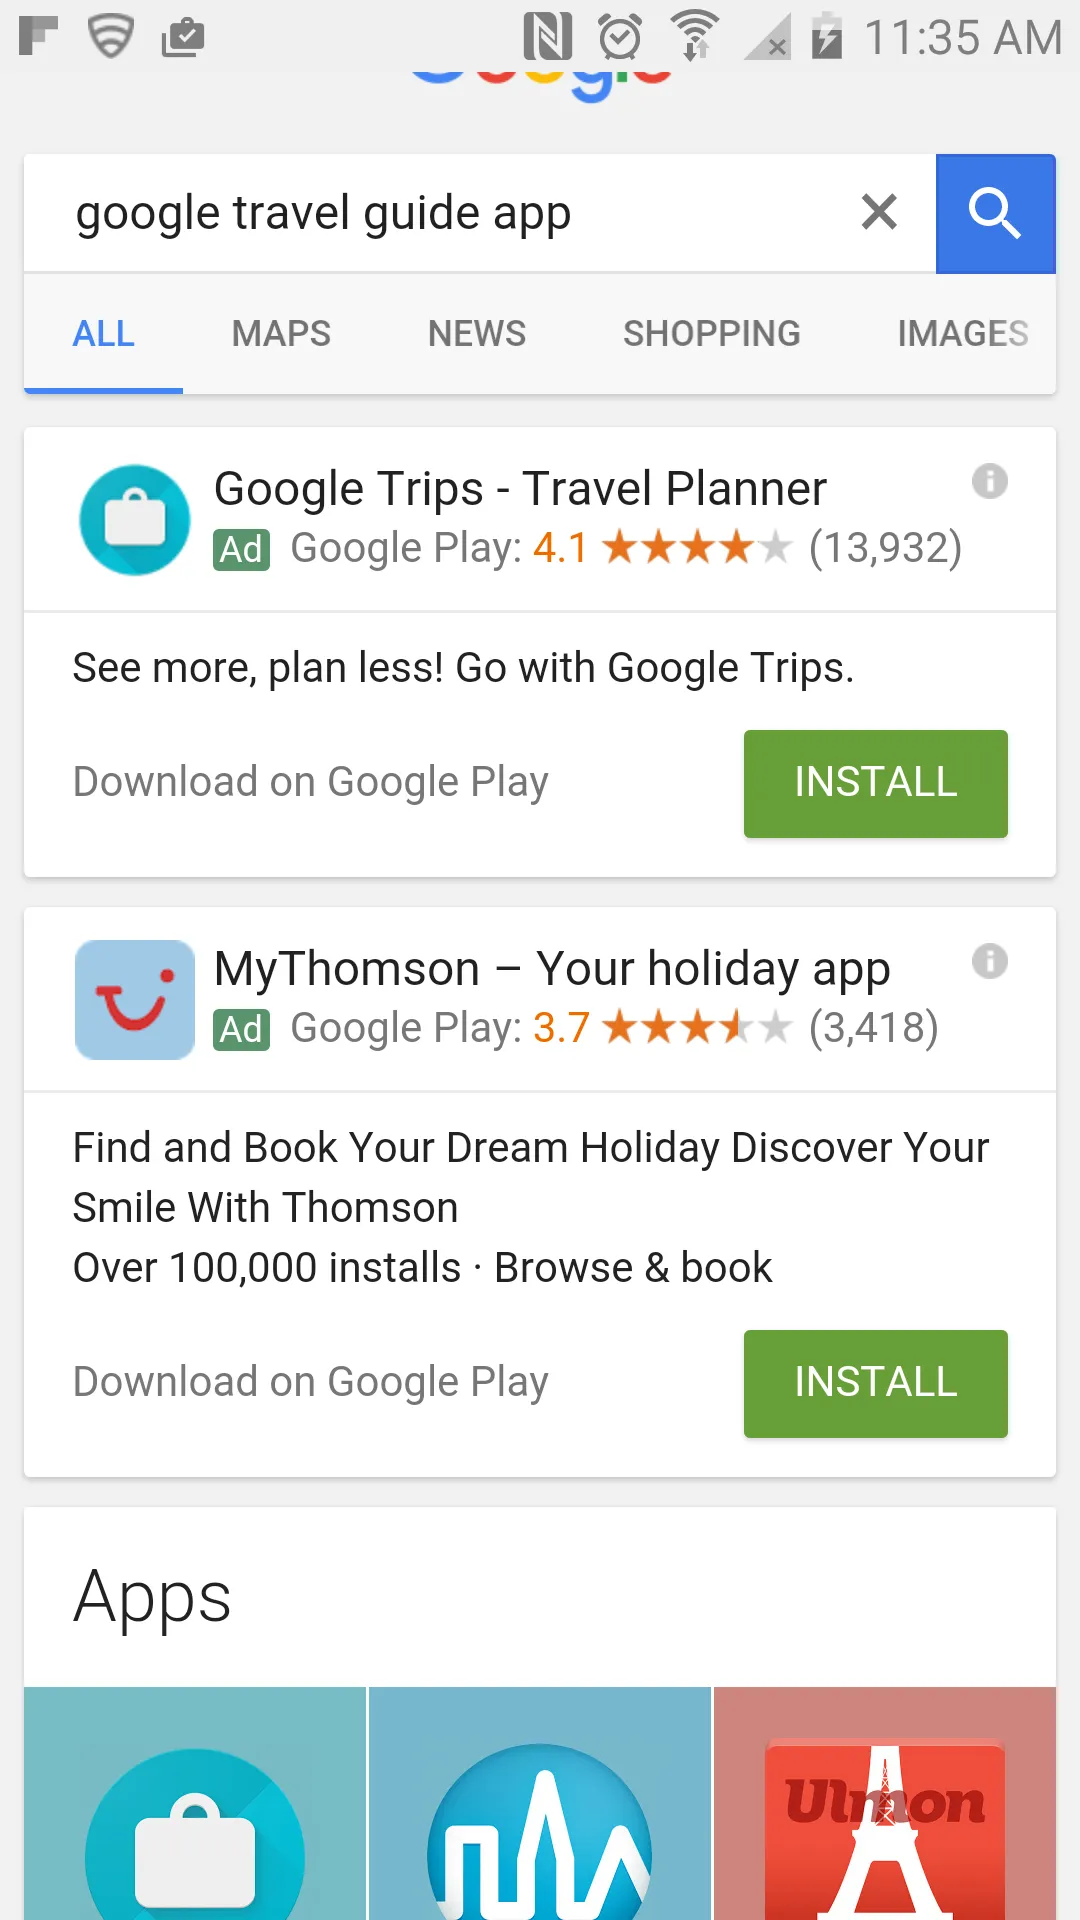 Google Travel Guide apps 6